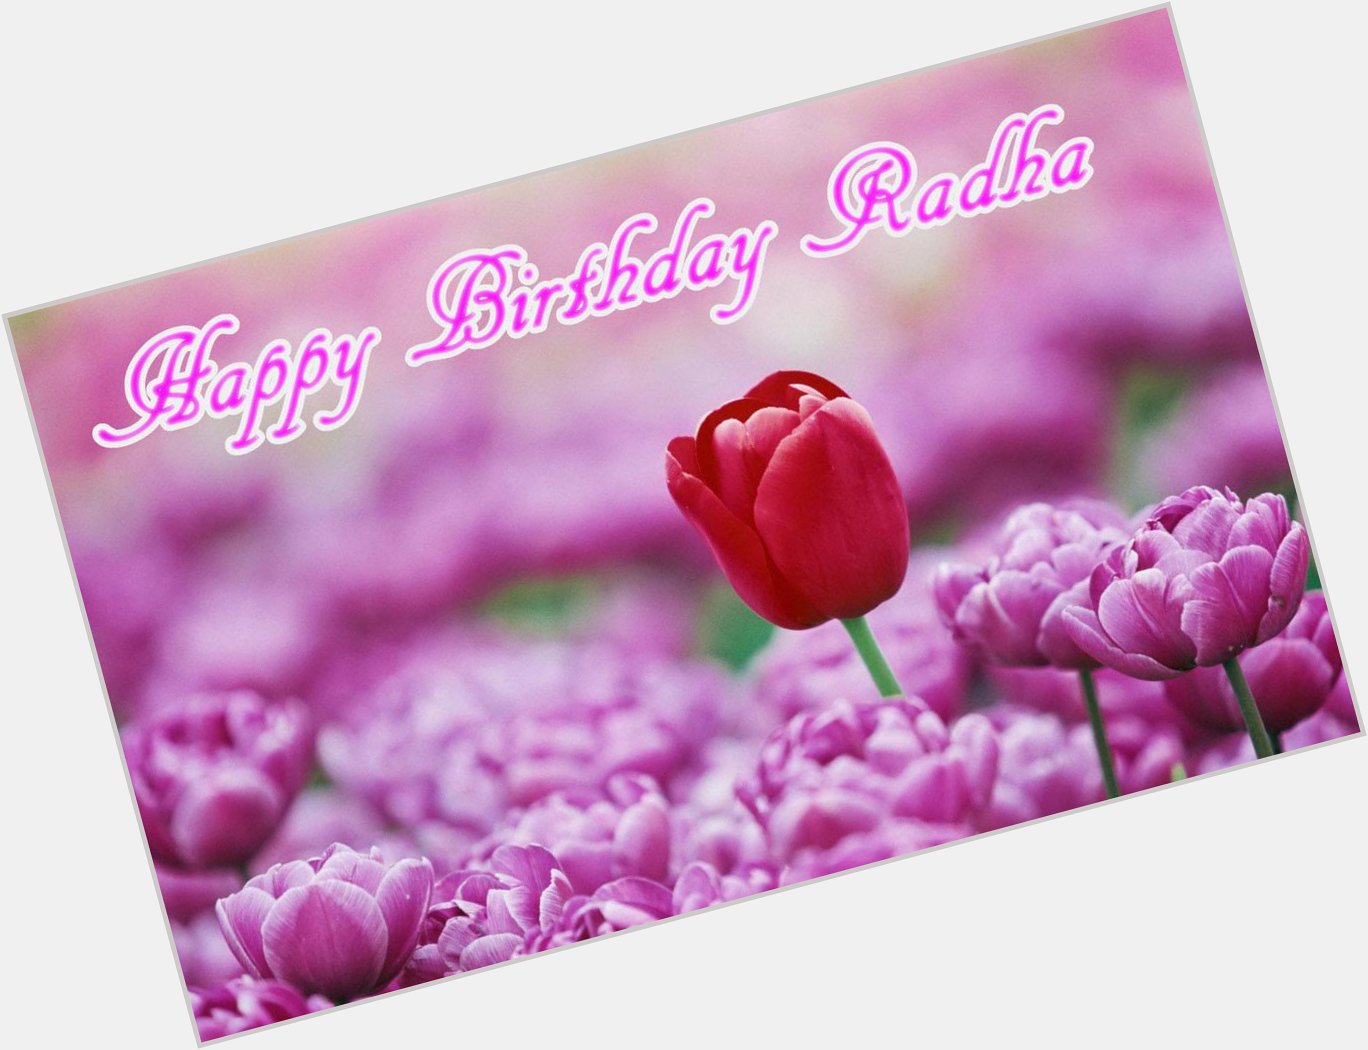  Happy Birthday Radha!

Have a wonderful Day!!! :) 